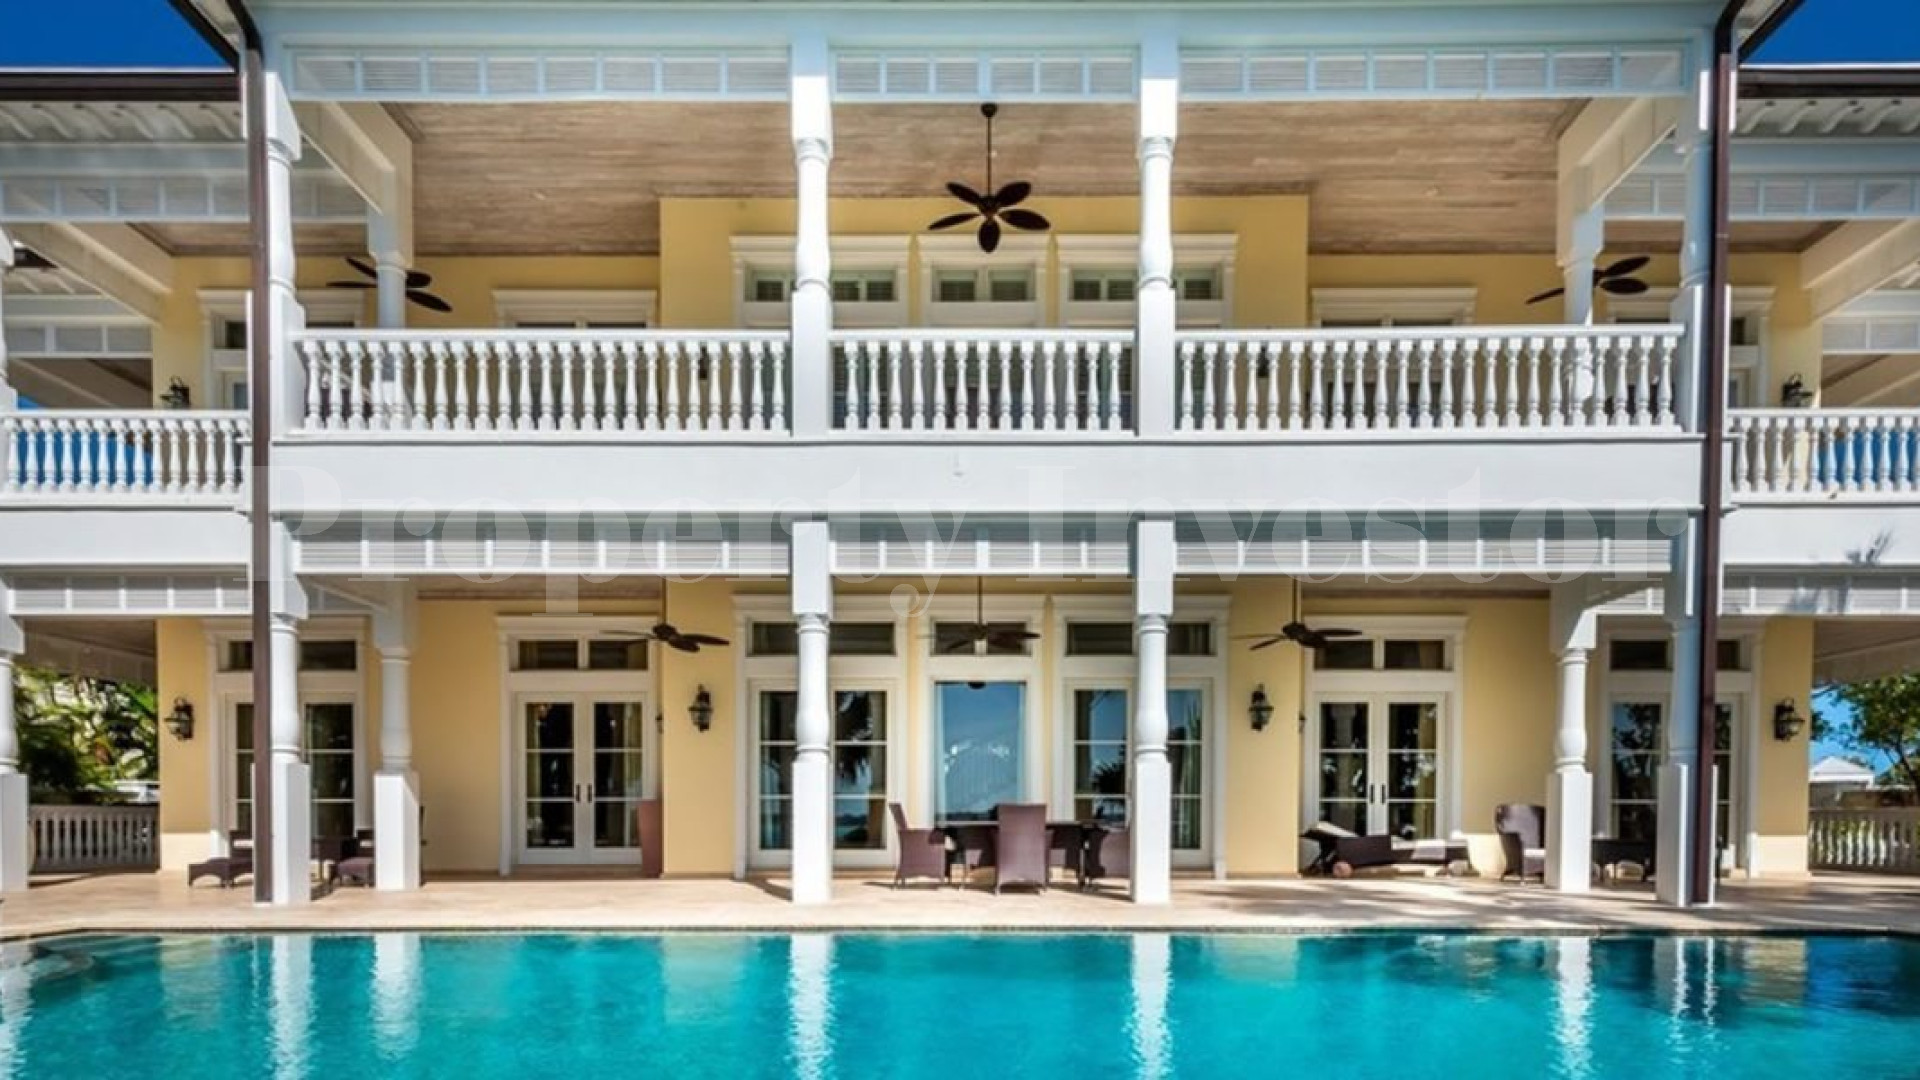 Impressive 6 Bedroom Luxury Oceanfront Villa Located in Prestigious Gated Community for Sale on Paradise Island, Bahamas